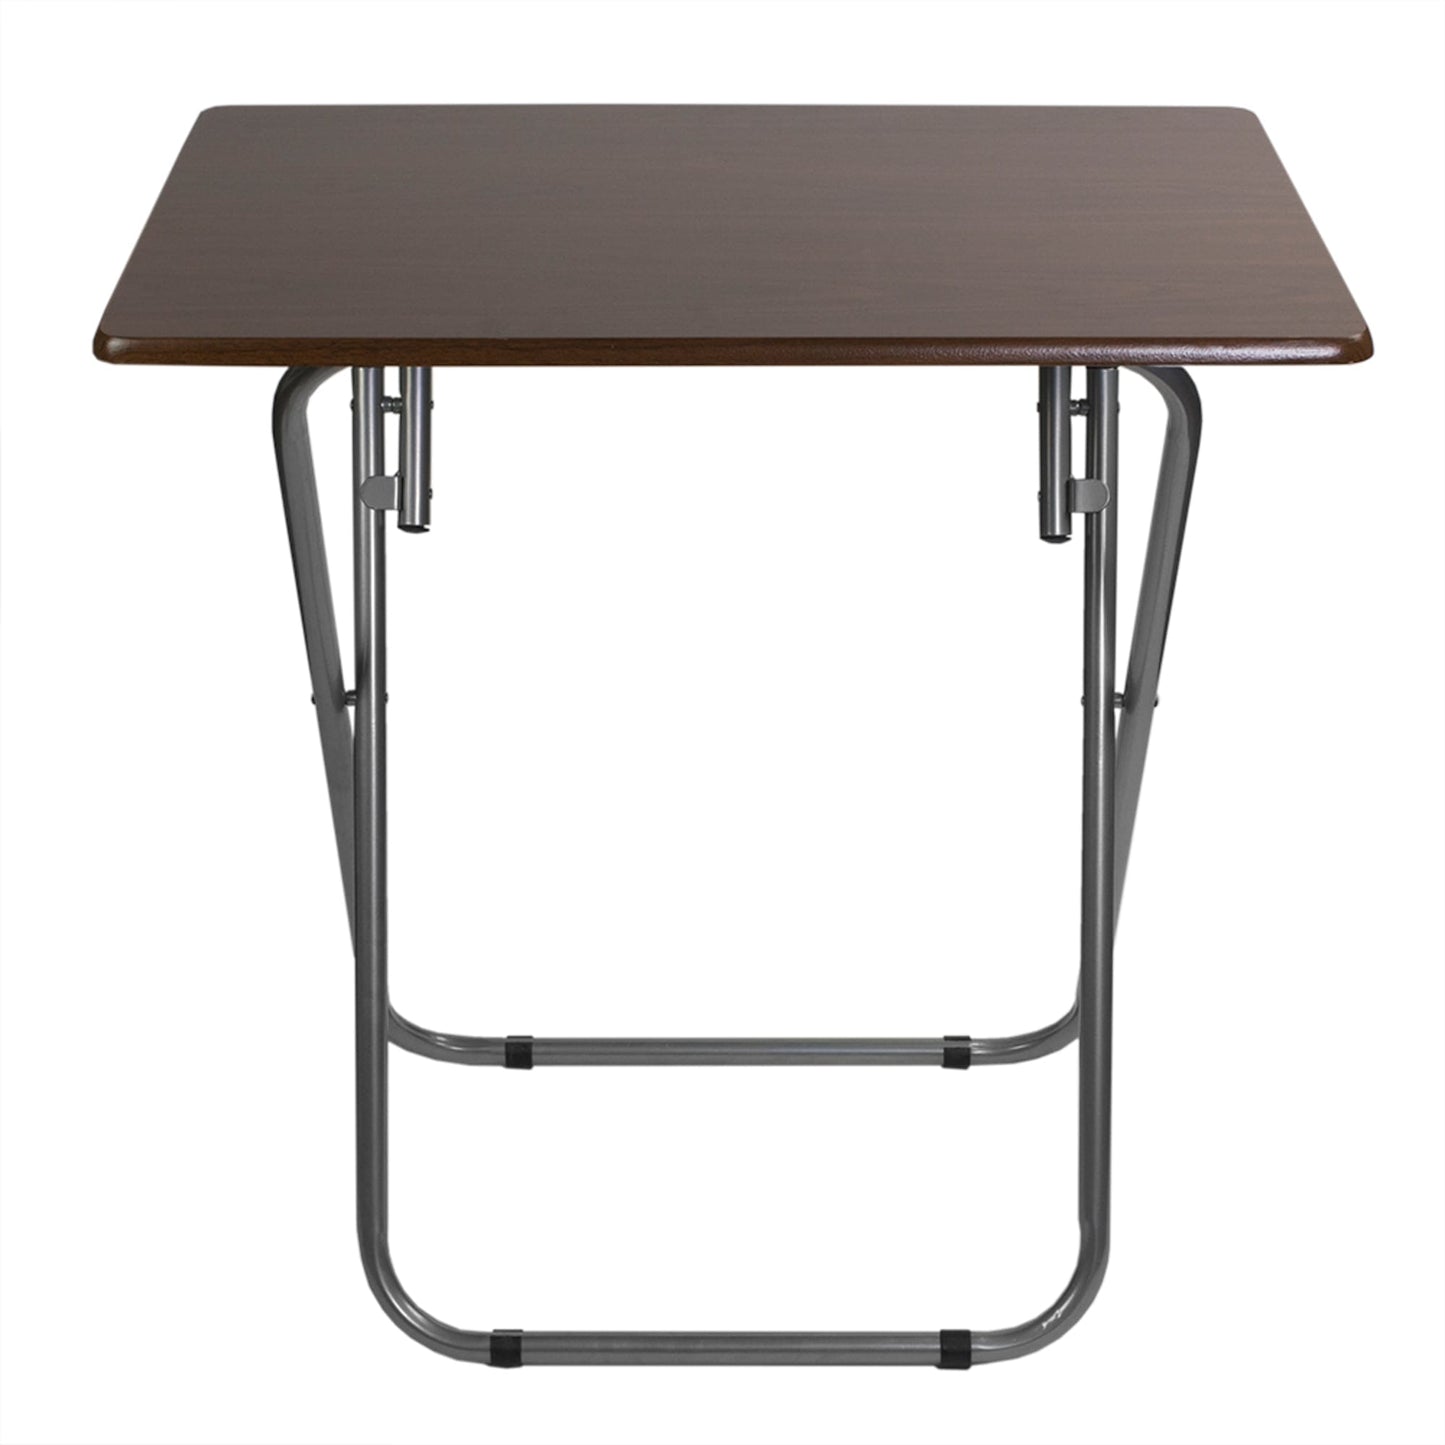 Jumbo Multi-Purpose Foldable Table, Cherry